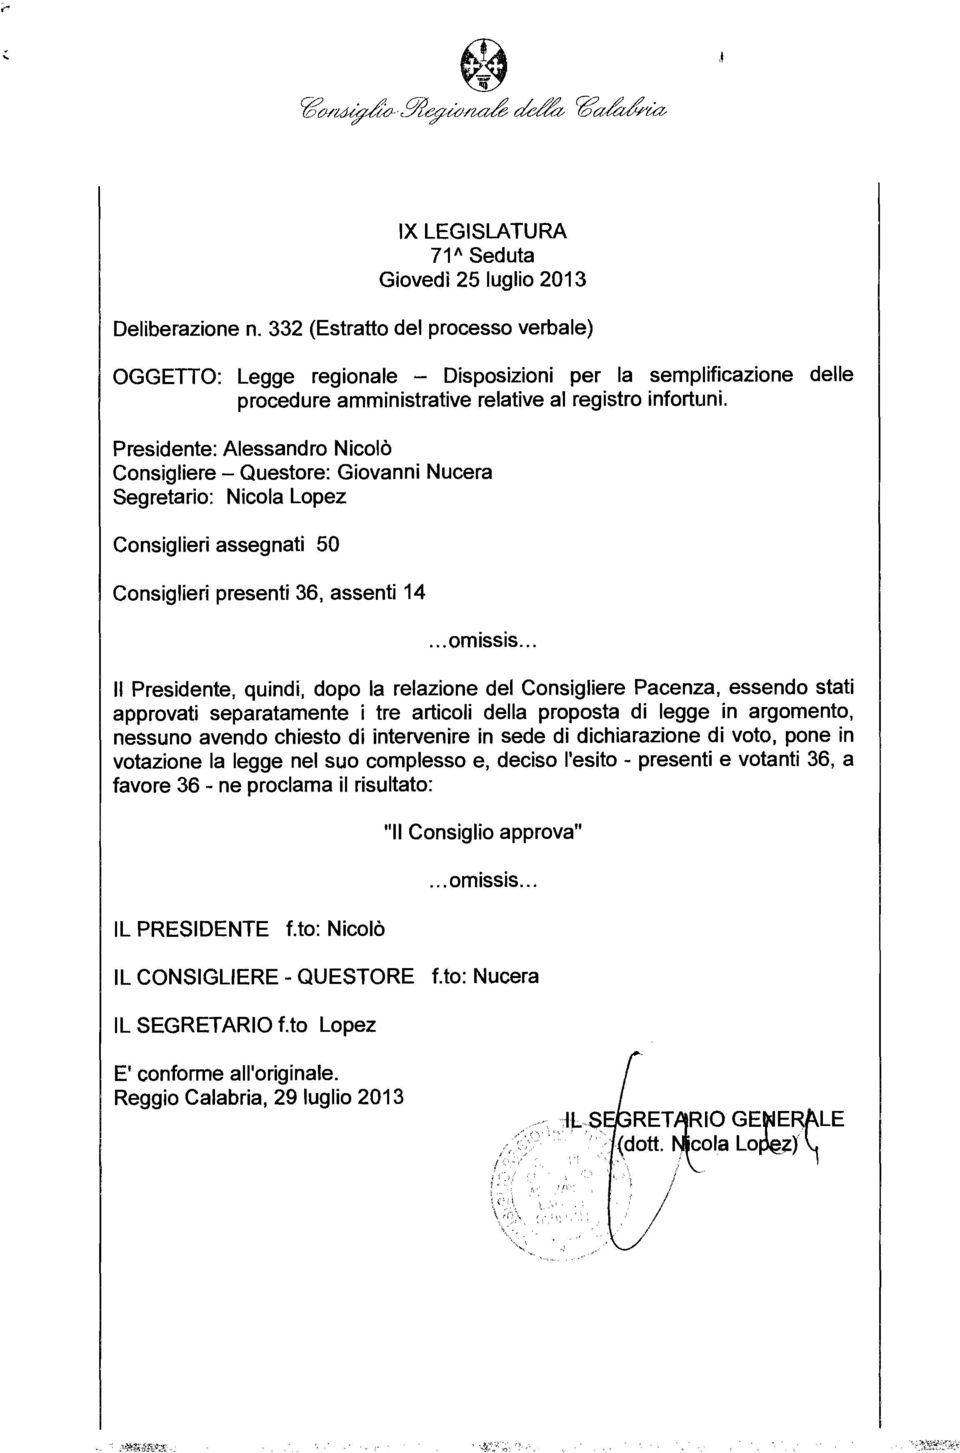 Presidente: Alessandro Nicolò Consigliere - Questore: Giovanni Nucera Segretario: Nicola Lopez Consiglieri assegnati 50 Consiglieri presenti 36, assenti 14... omissis.